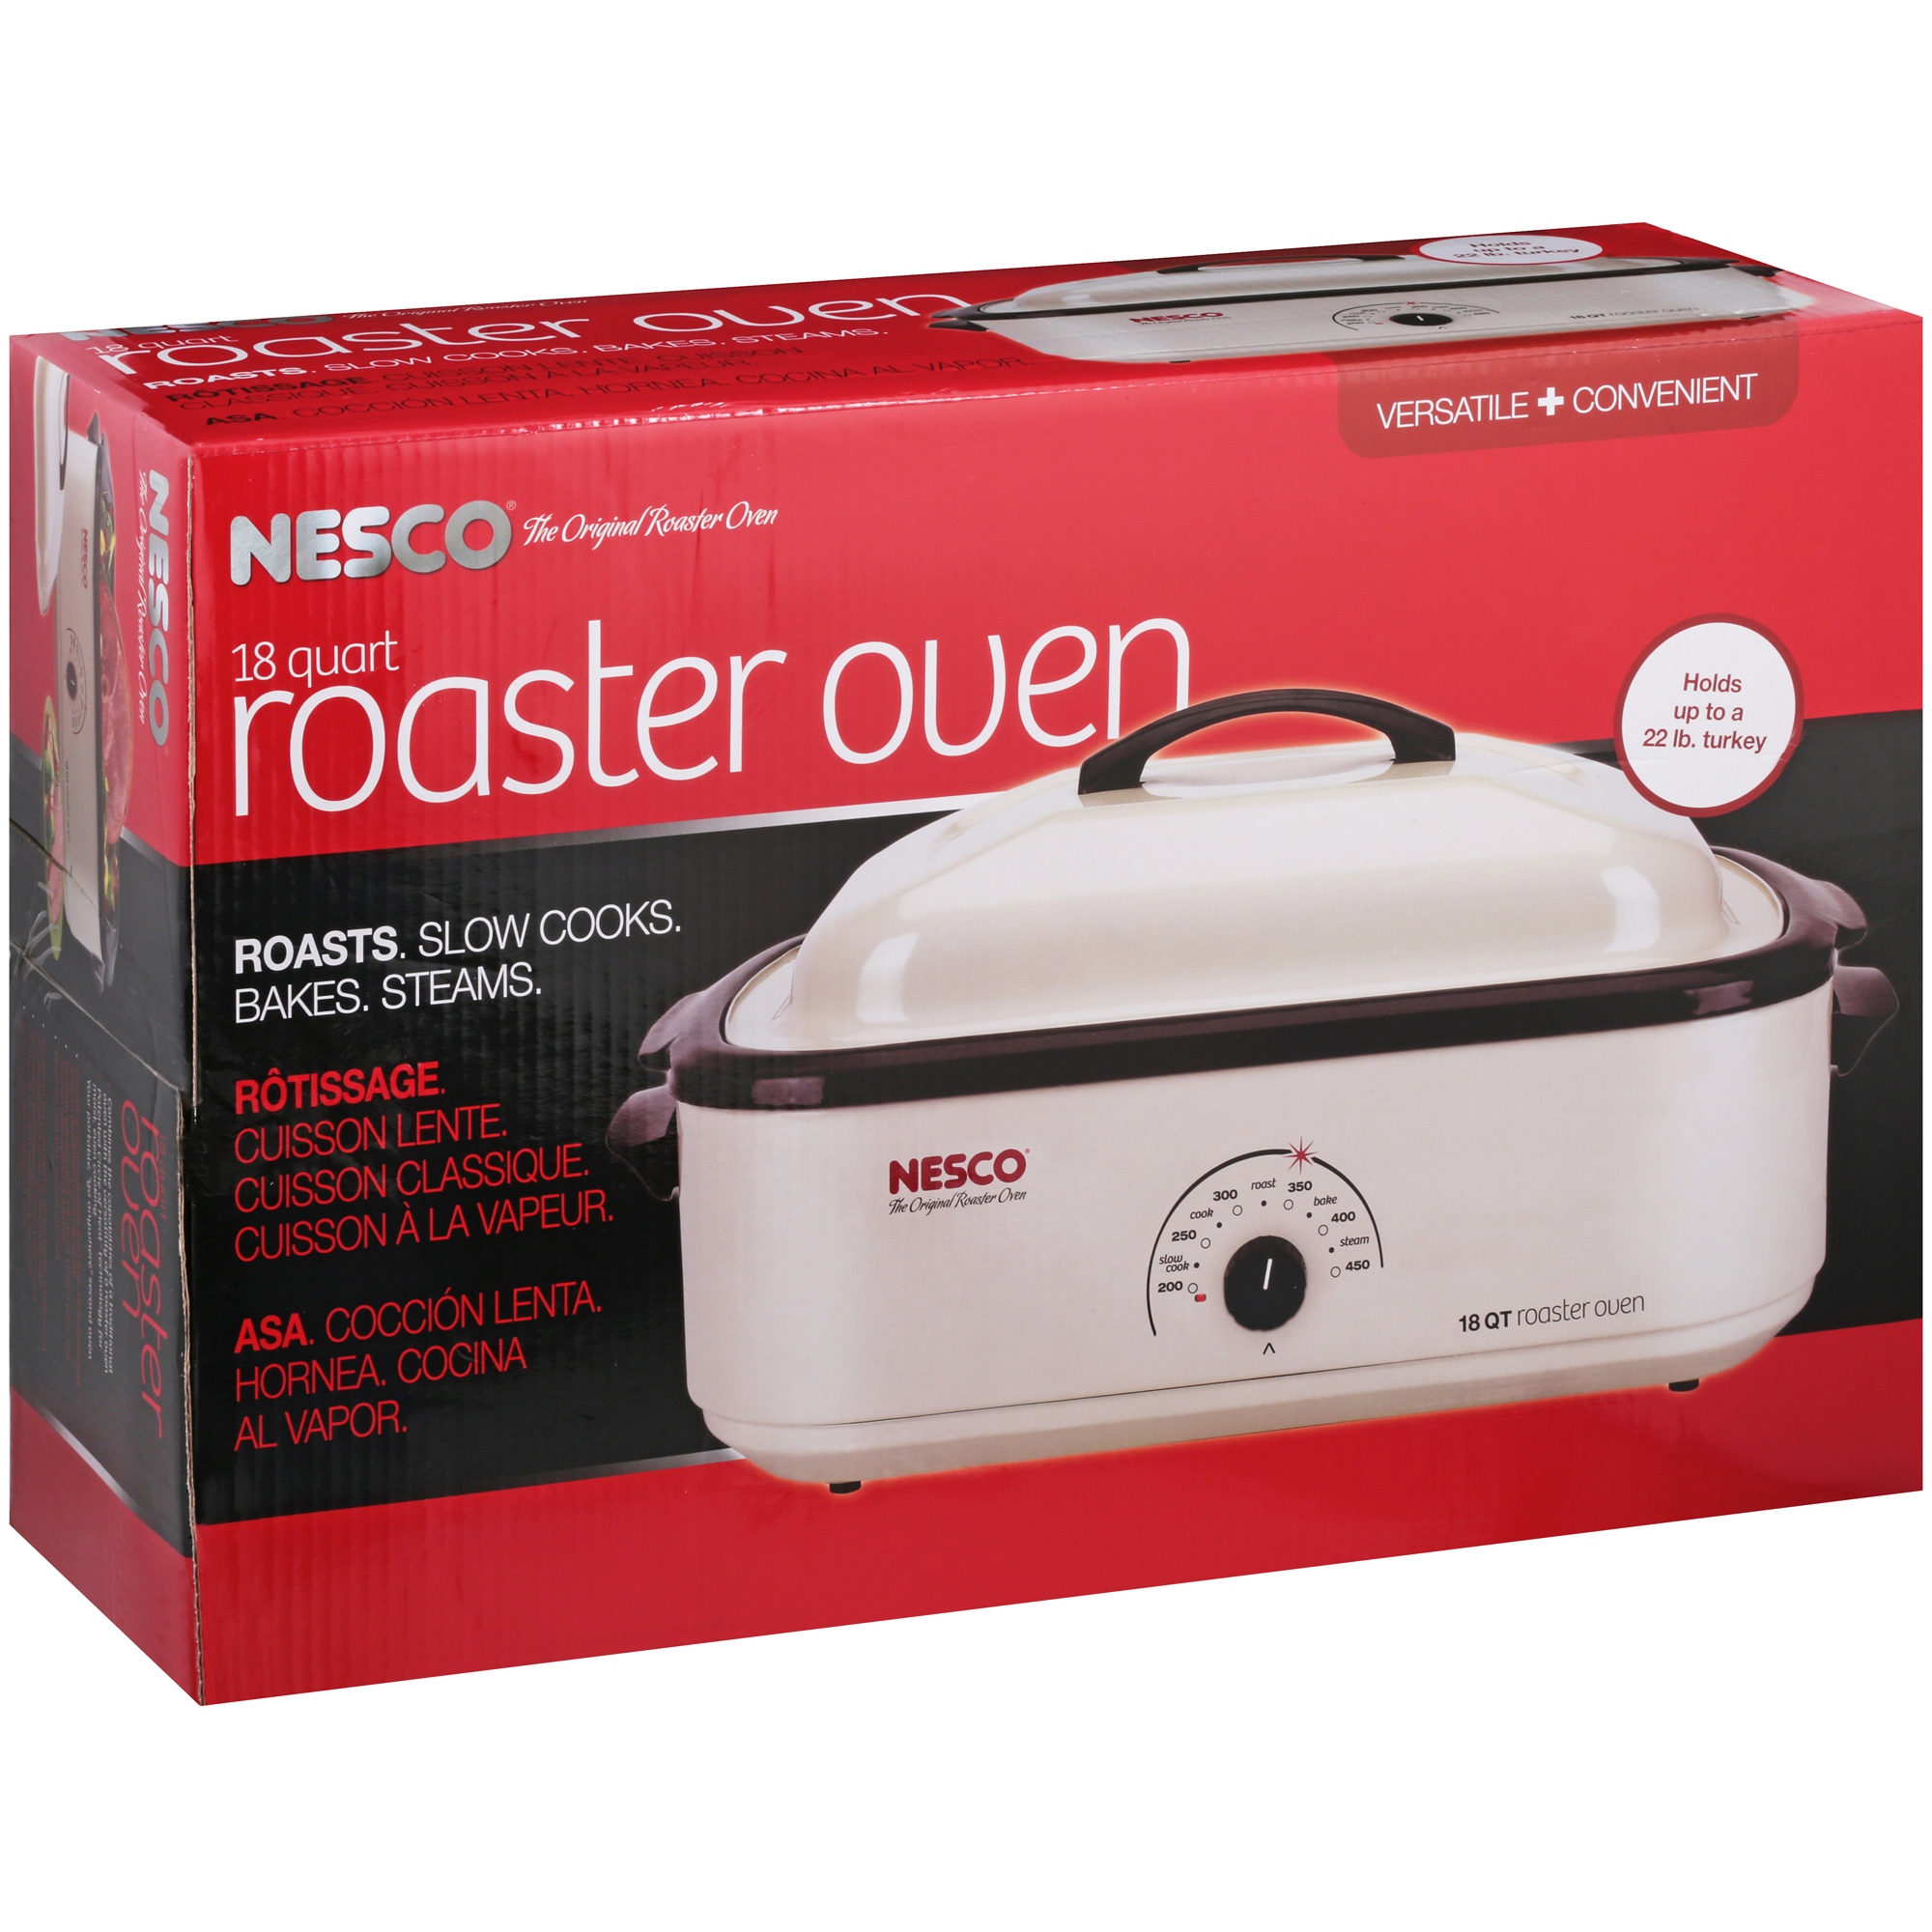 The NESCO 18 Quart Roaster Oven Four - image 2 of 8